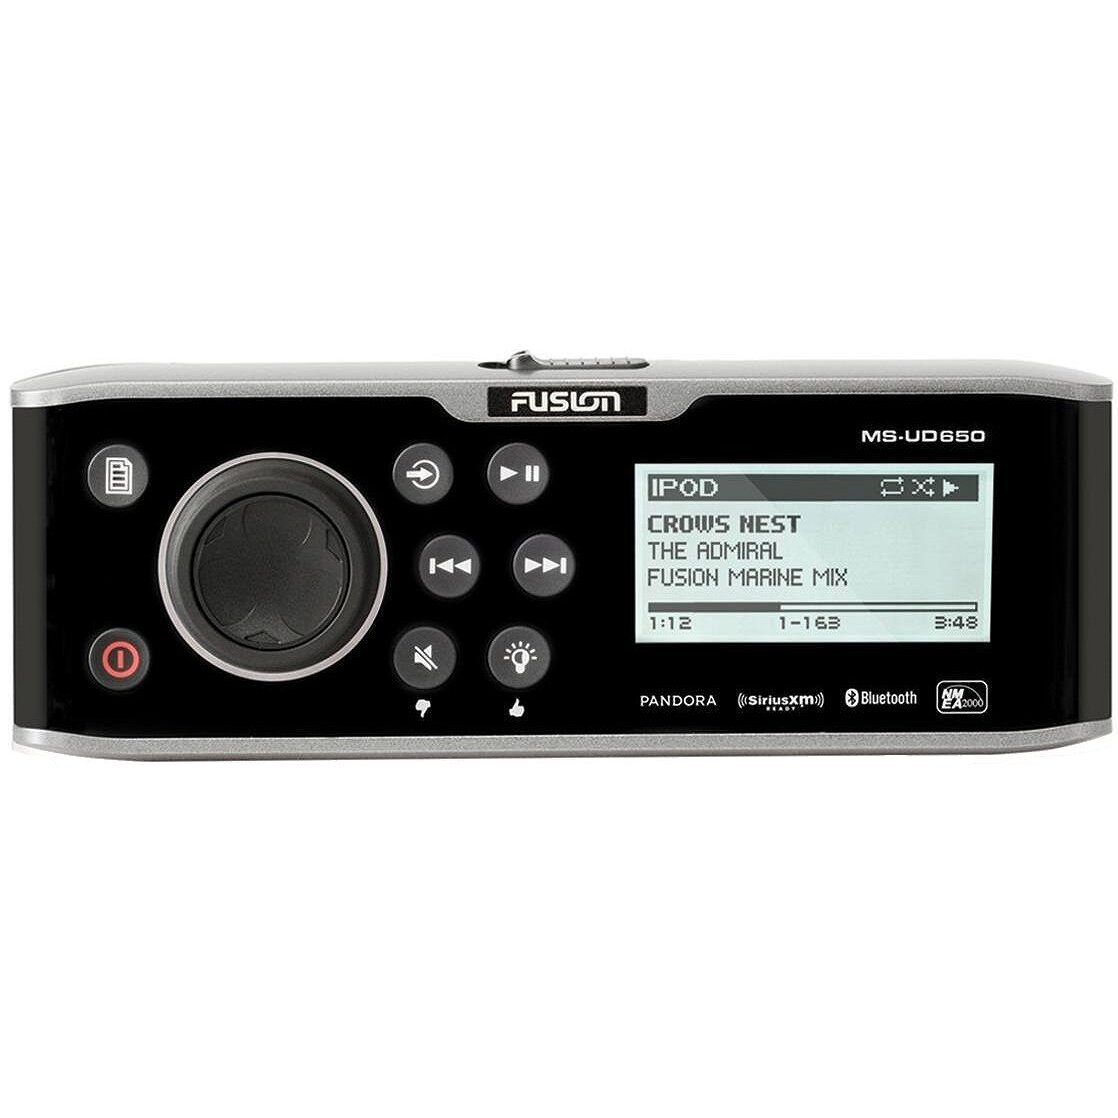 Fusion MS-UD650 AM/FM Radio Receiver USB iPhone Control Bluetooth 3 Zone SiriusXM Ready Internal Dock Waterproof Marine Stereo